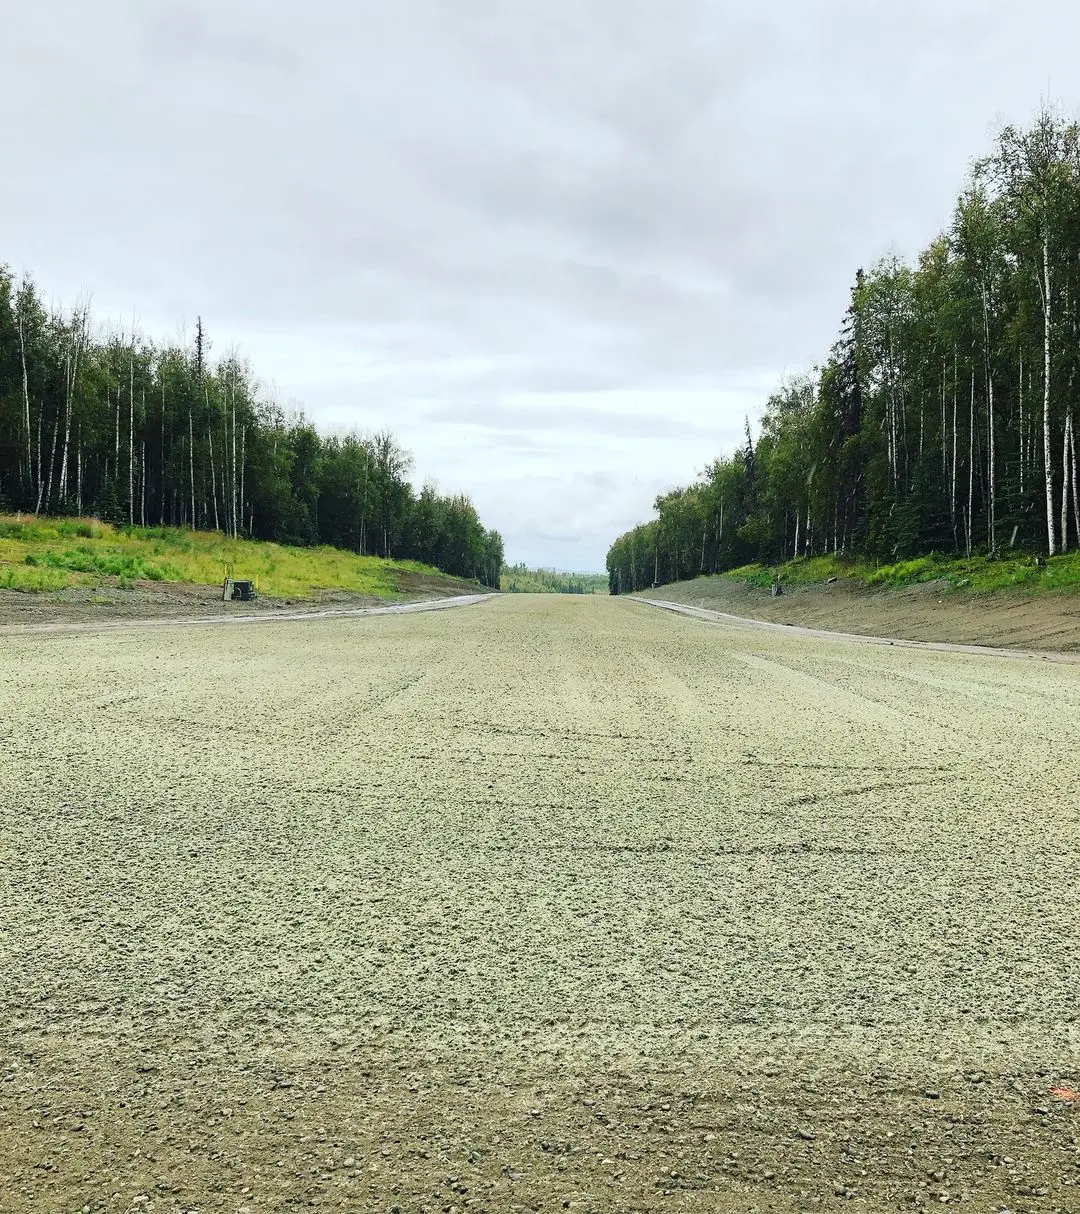 wasilla alaska gated community property for sale 2200 long hydro seeded grass runway